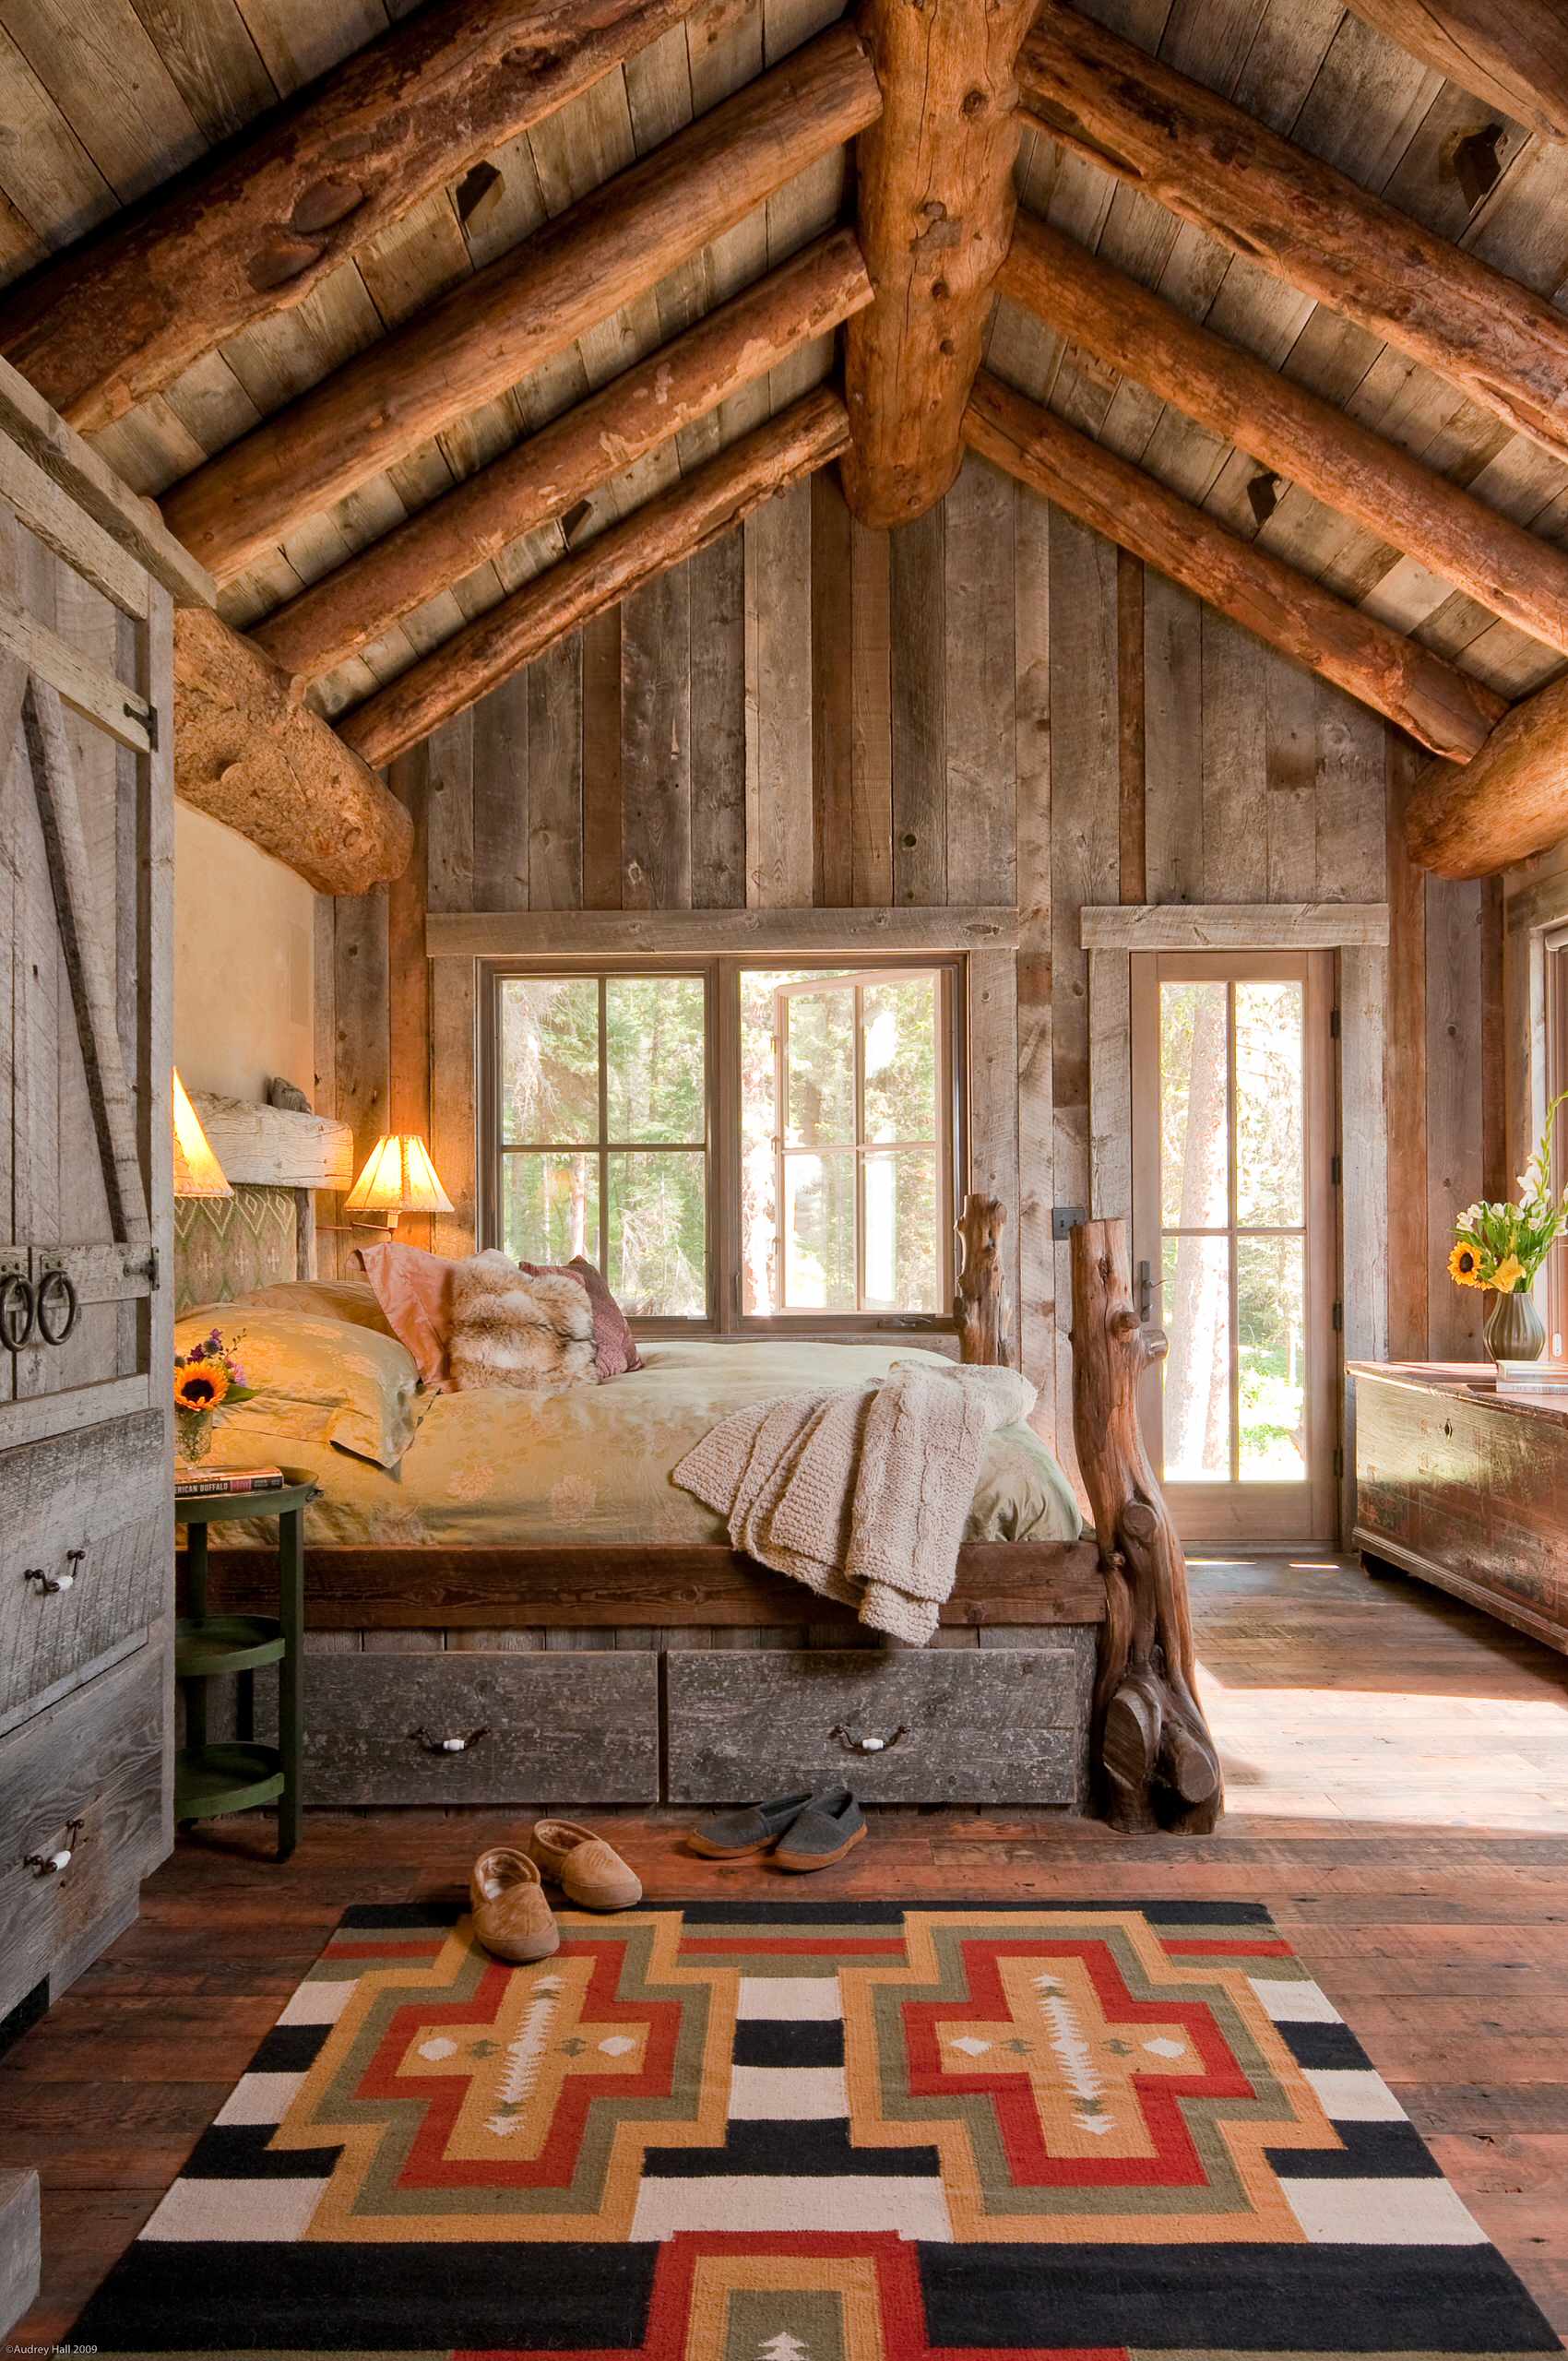 Rustic Cabin Interior Photos Ideas